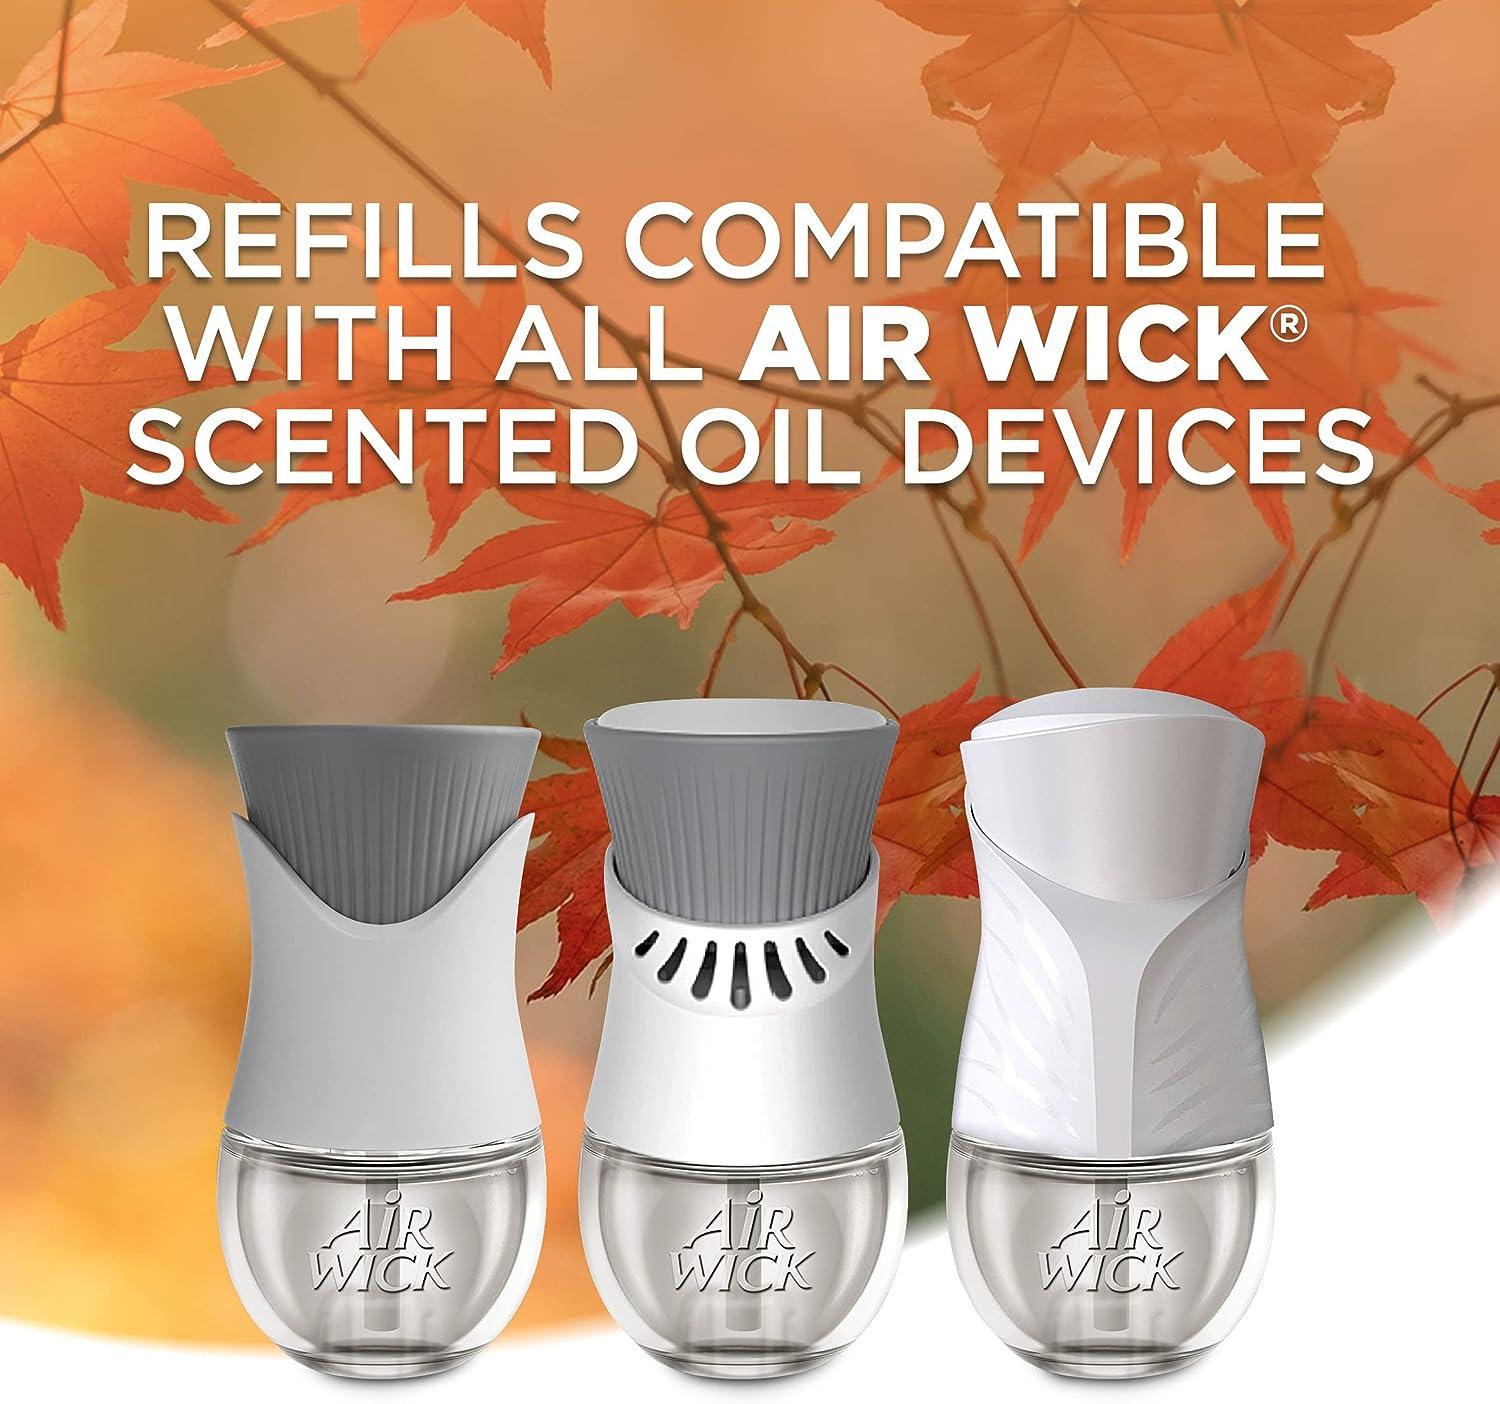 Air Wick Kit de inicio de aceite perfumado enchufable varita 2 recargas - VIRTUAL MUEBLES